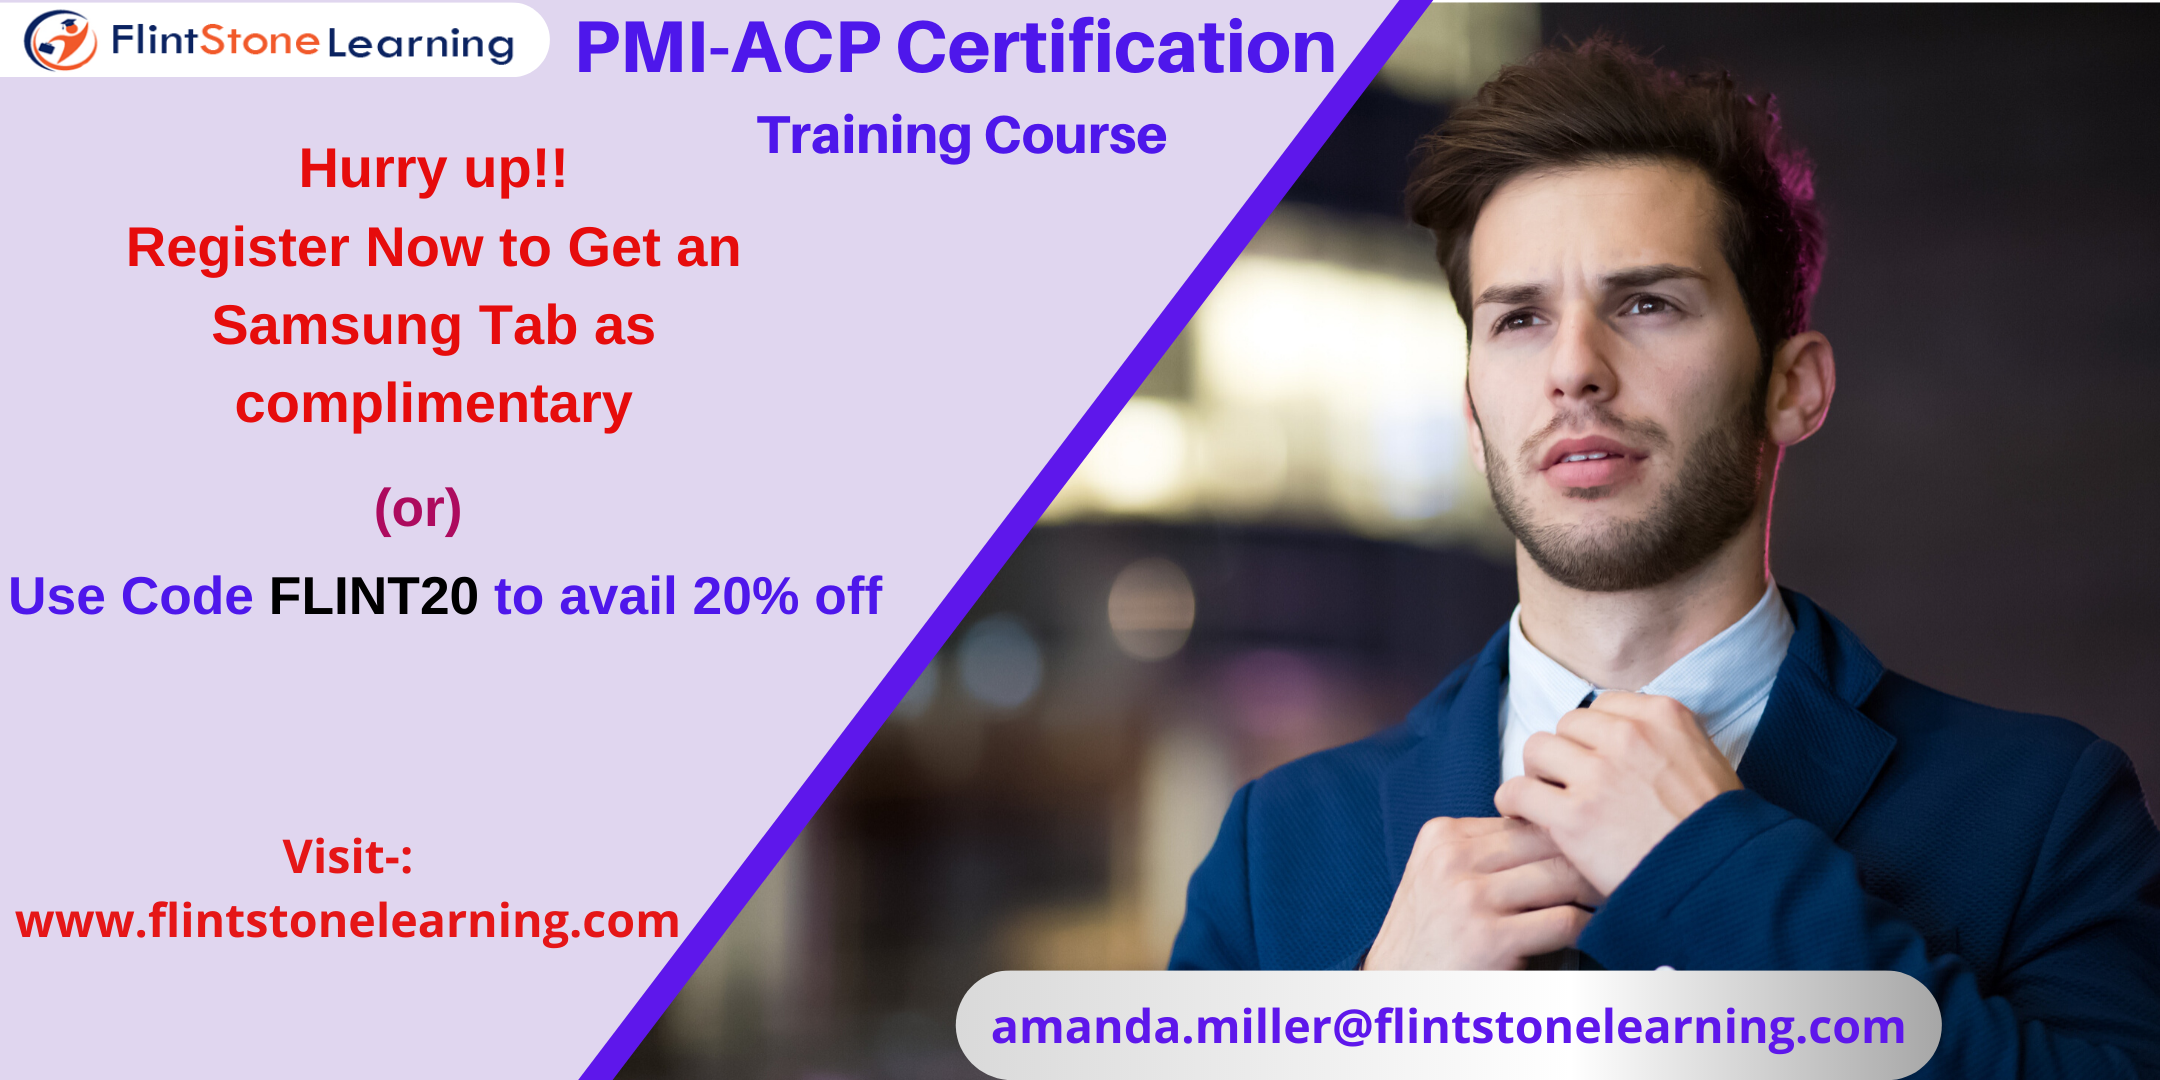 PMI-ACP Certification Training Course in Eureka, CA